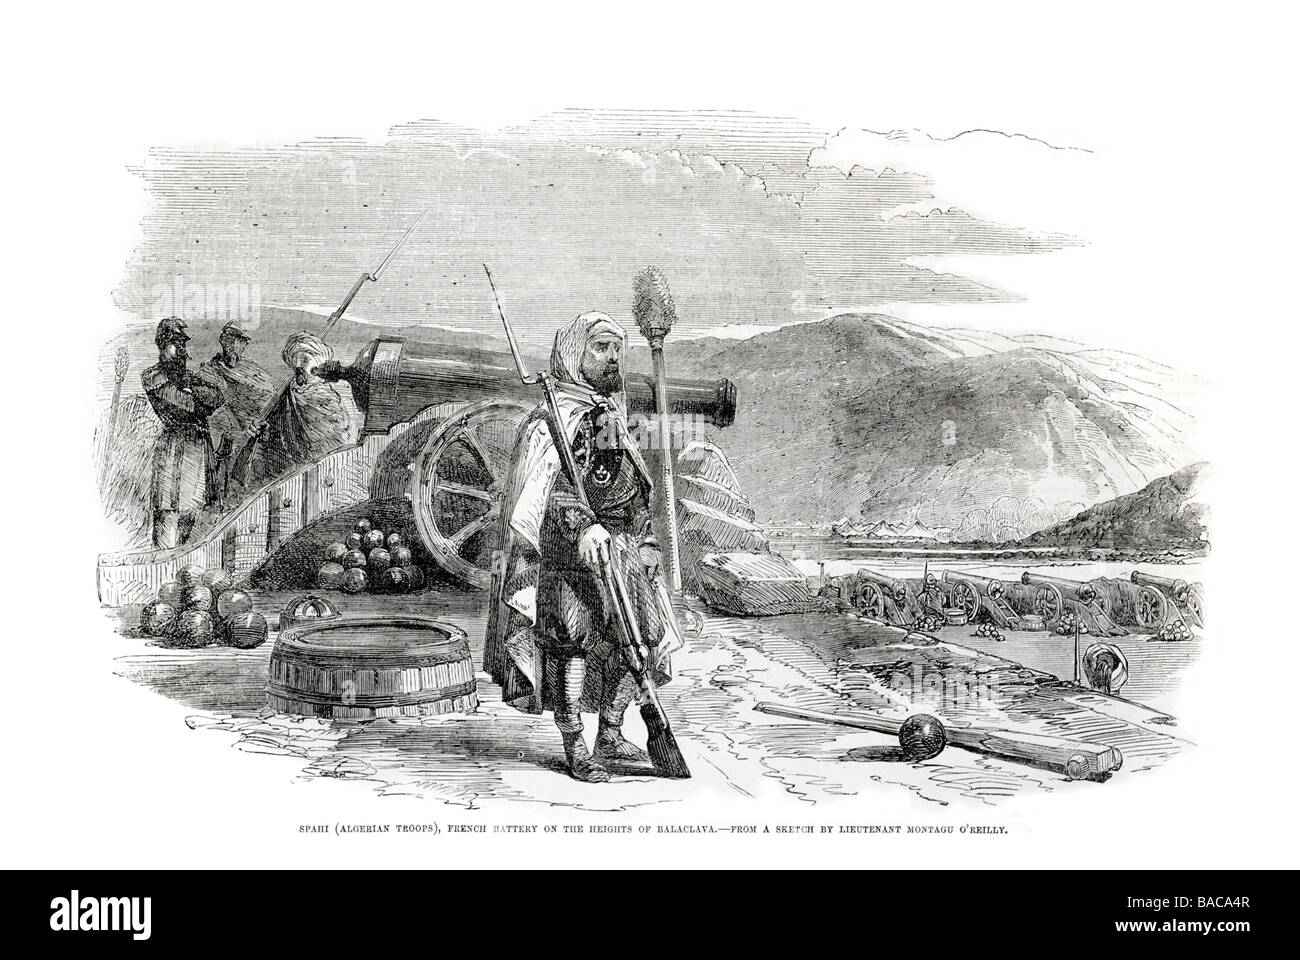 Spahi truppe algerine batteria francese sulle altezze di balaclava sketch dal tenente montagu o'reilly 1854 Foto Stock